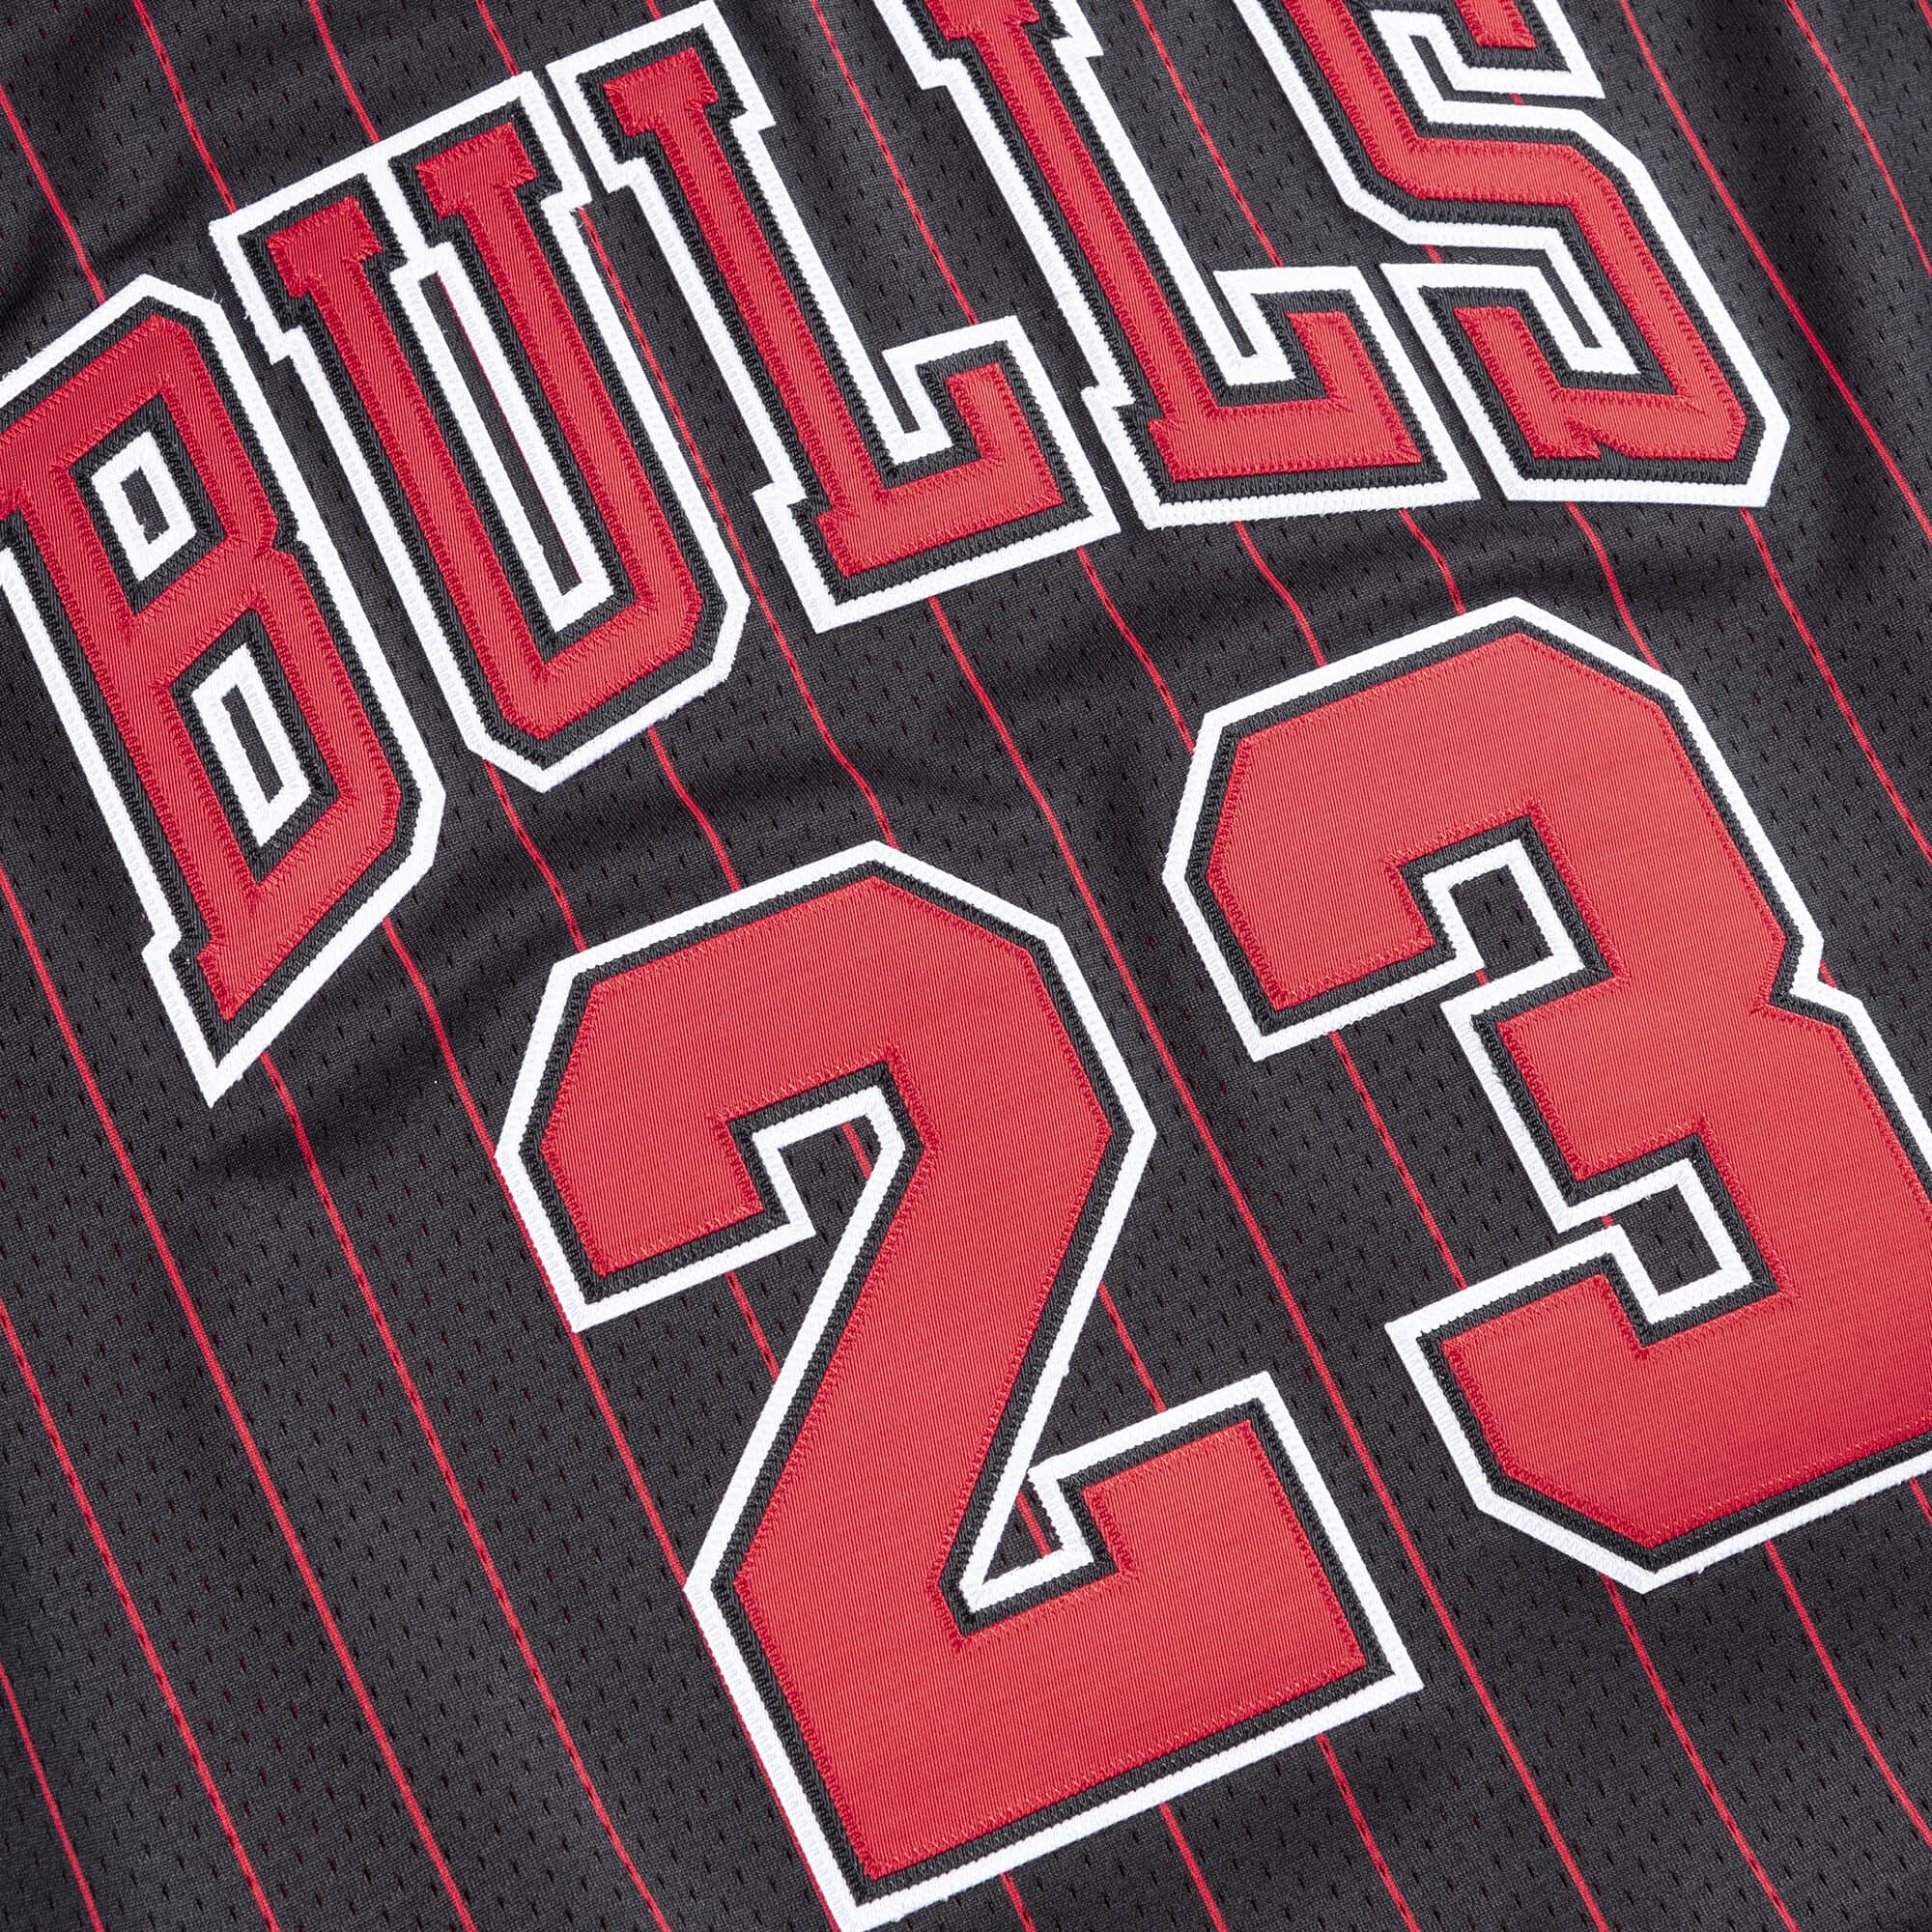 Mitchell & Ness Men's Chicago Bulls Michael Jordan Authentic Jersey - Red